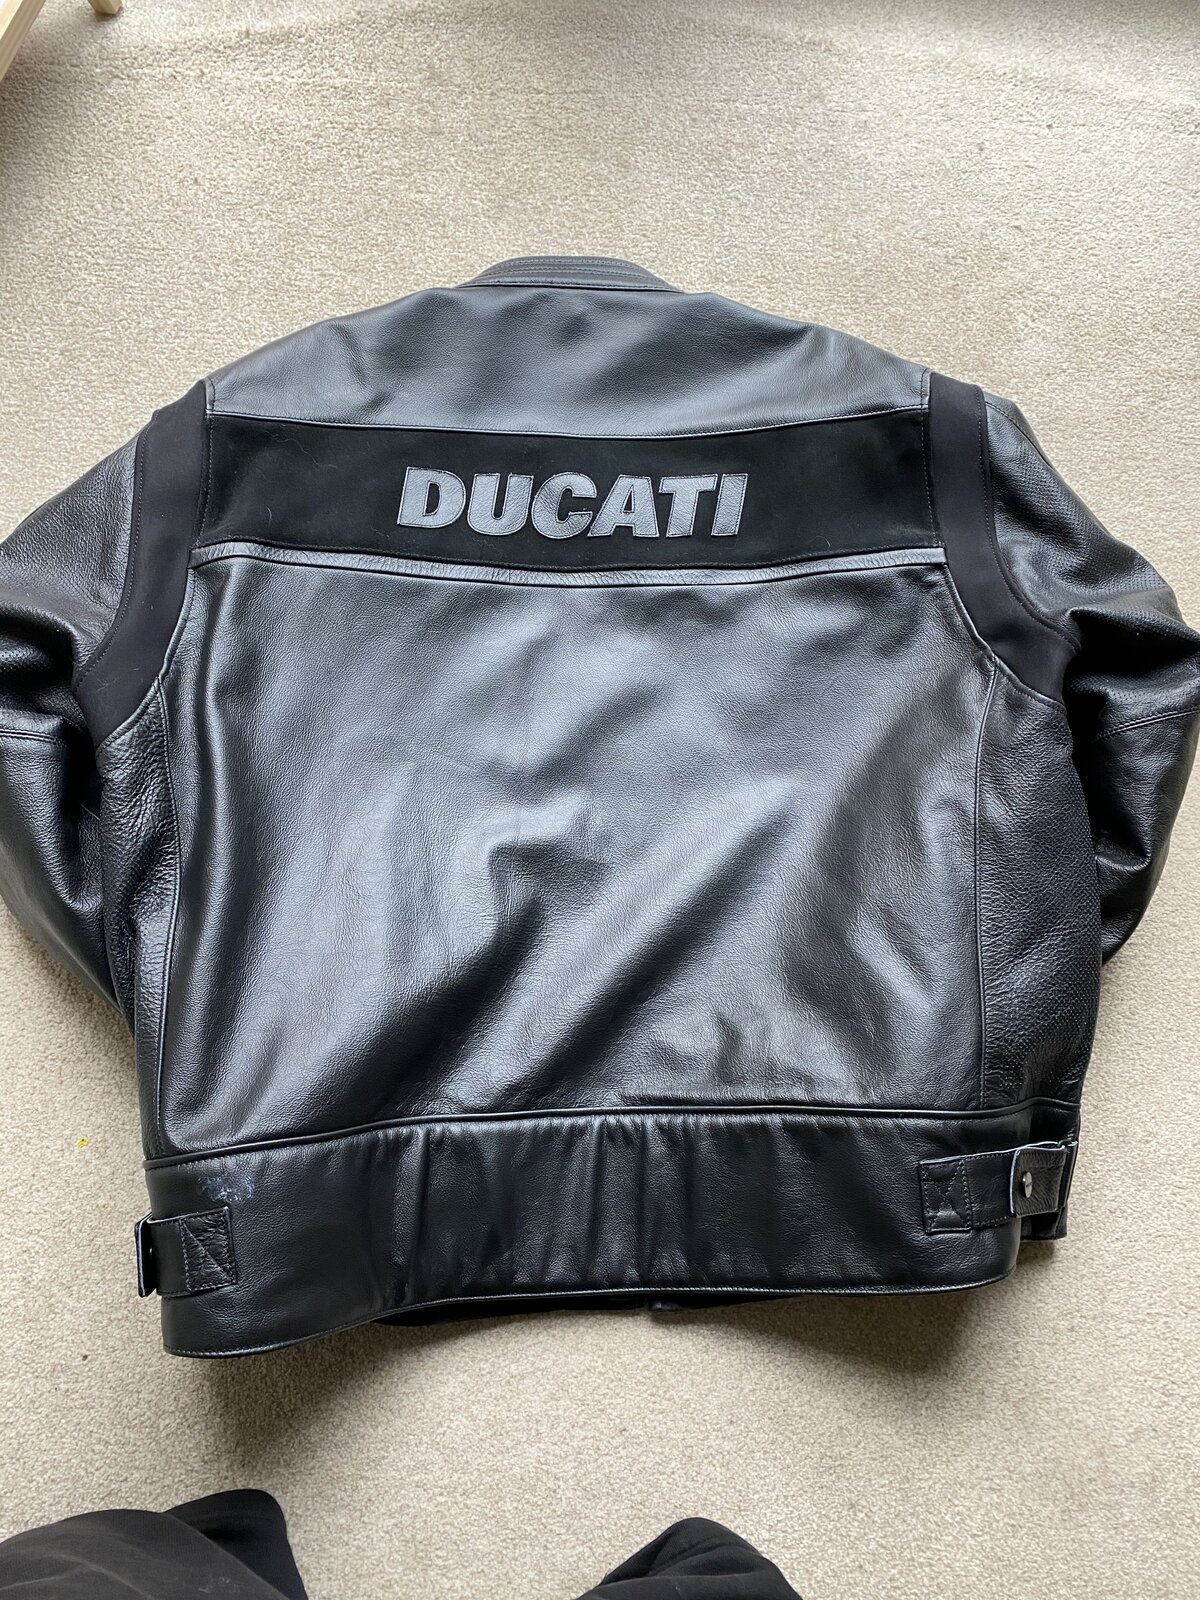 For Sale - Dainese Ducati Leather Jacket. 52/62 | Ducati Forum